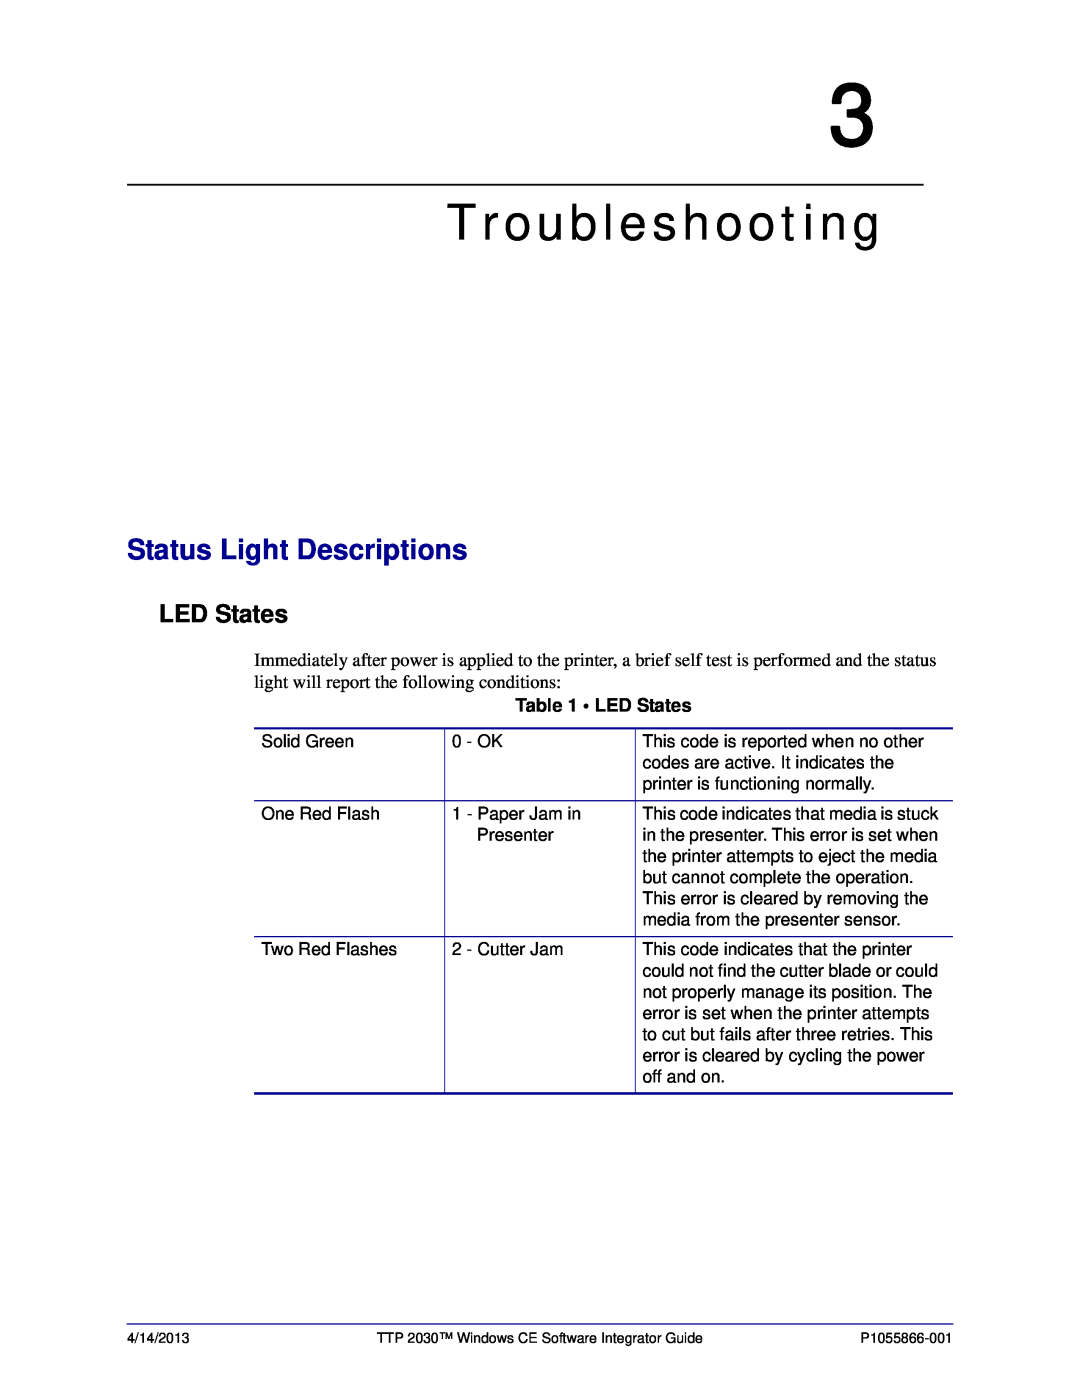 Zebra Technologies TTP 2030 manual Troubleshooting, Status Light Descriptions, LED States 